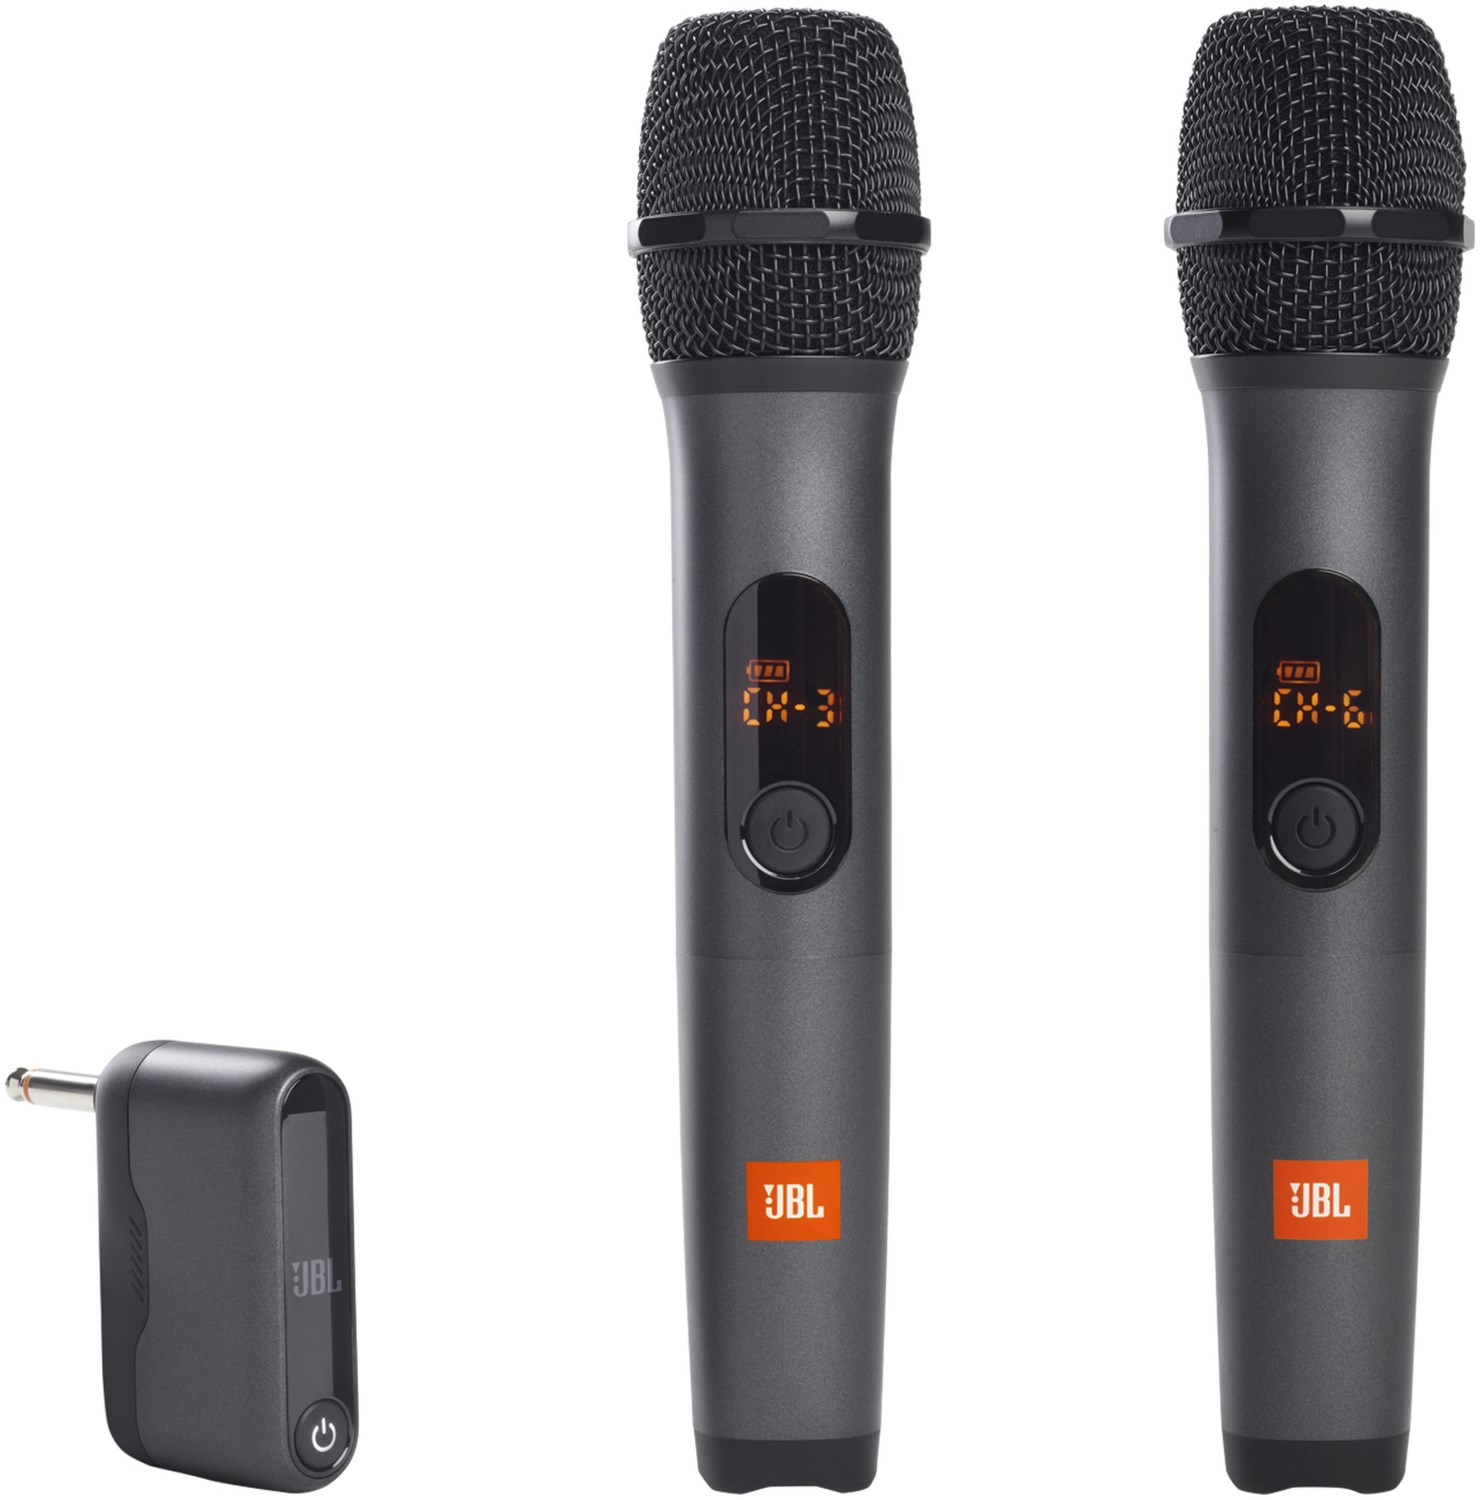 Wireless Mikrofon (2 Stück) inkl. Dongle Receiver von JBL